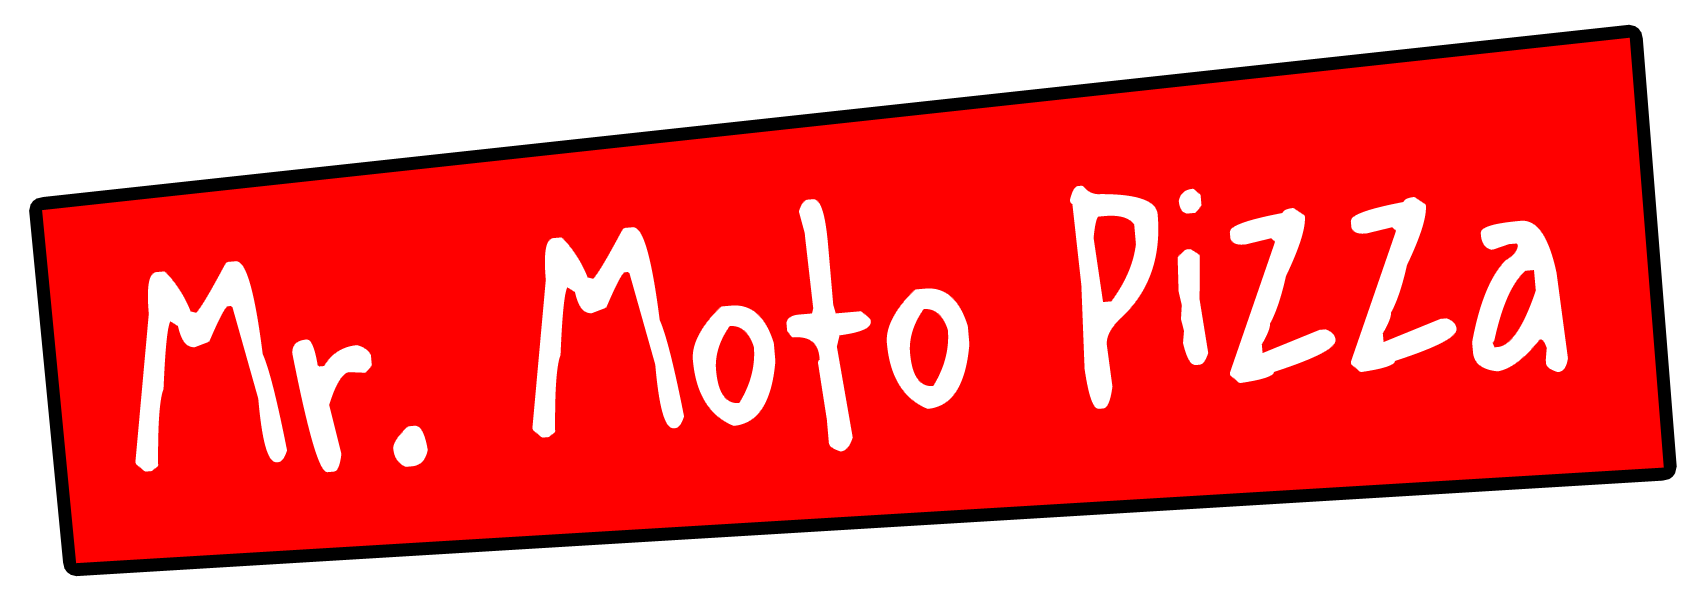 Mr. Moto Pizza Arcadia